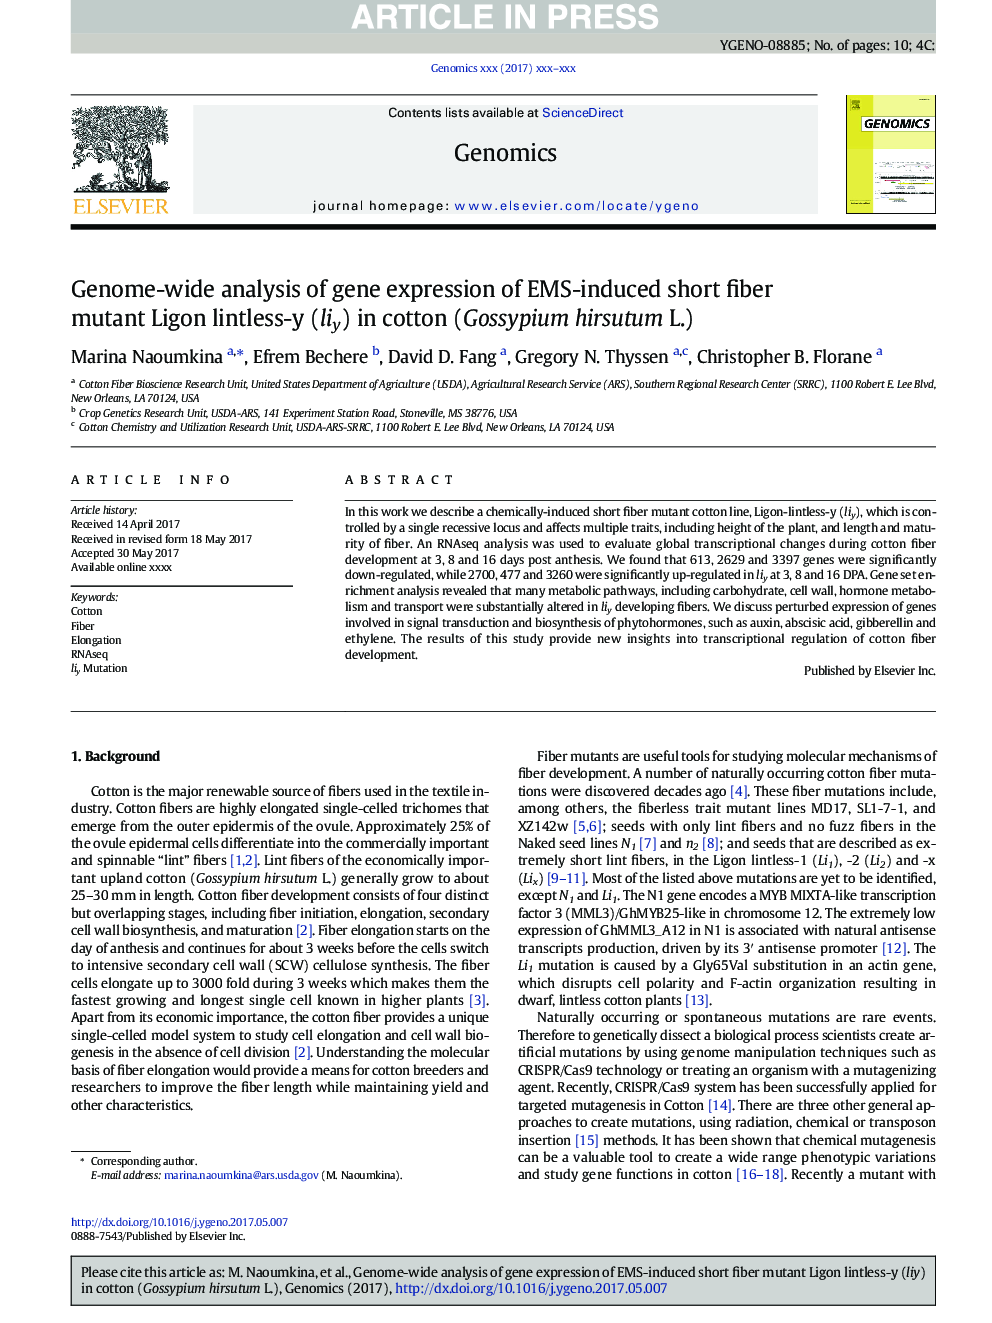 Genome-wide analysis of gene expression of EMS-induced short fiber mutant Ligon lintless-y (liy) in cotton (Gossypium hirsutum L.)